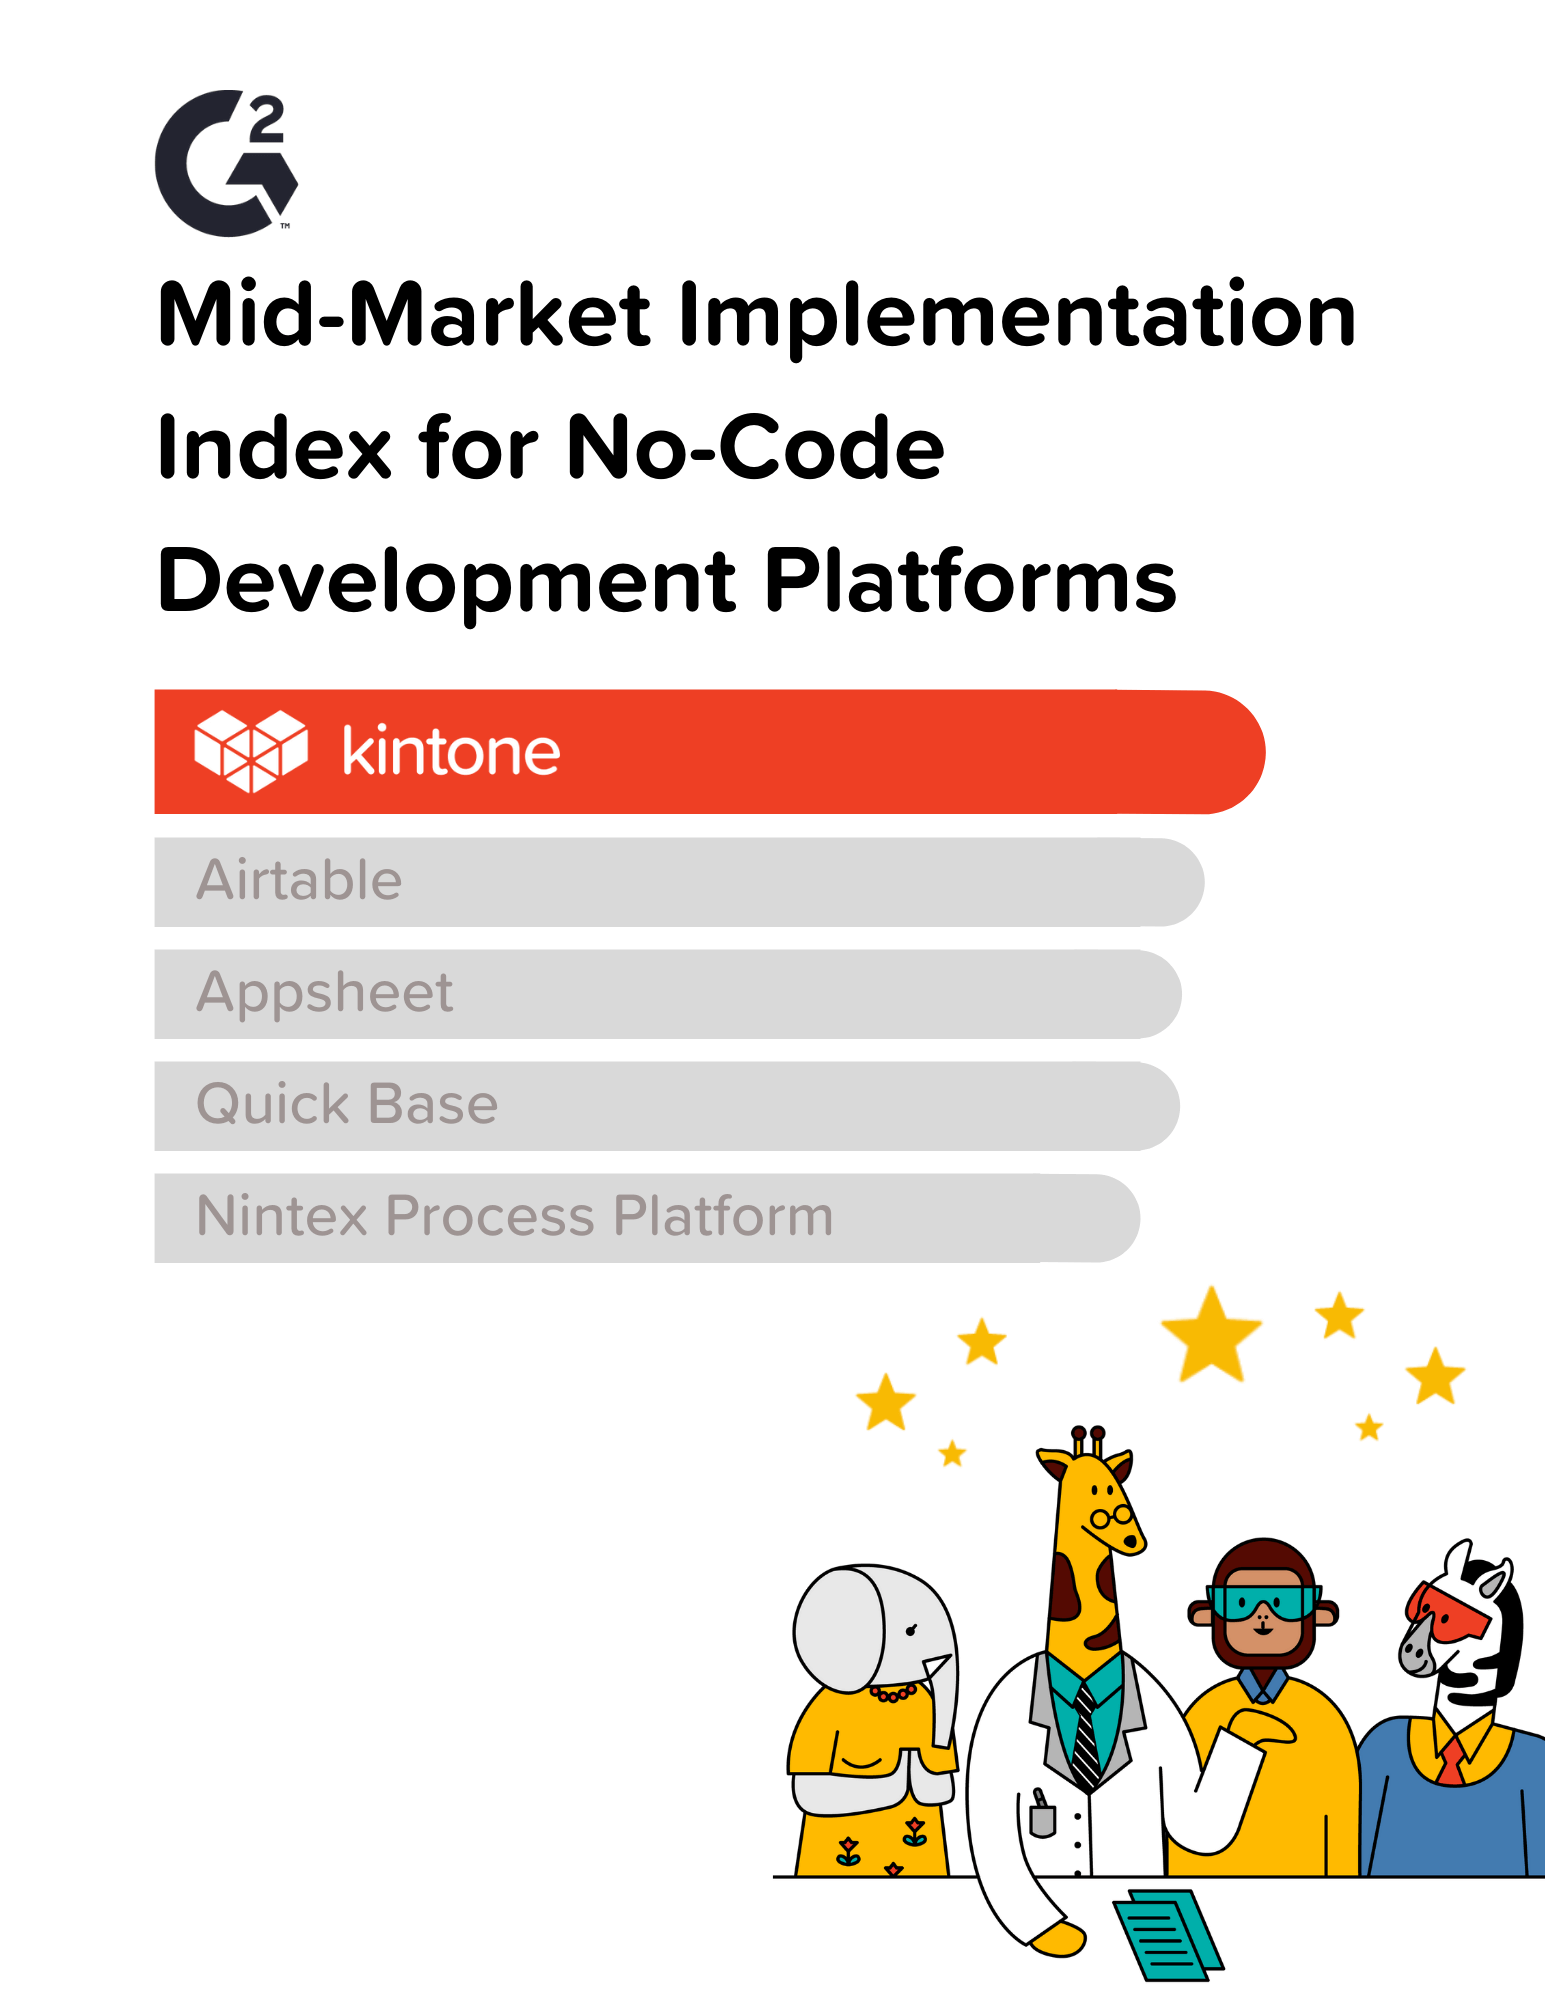 G2 Mid-Market Implementation Index for No-Code Development Platforms (1)